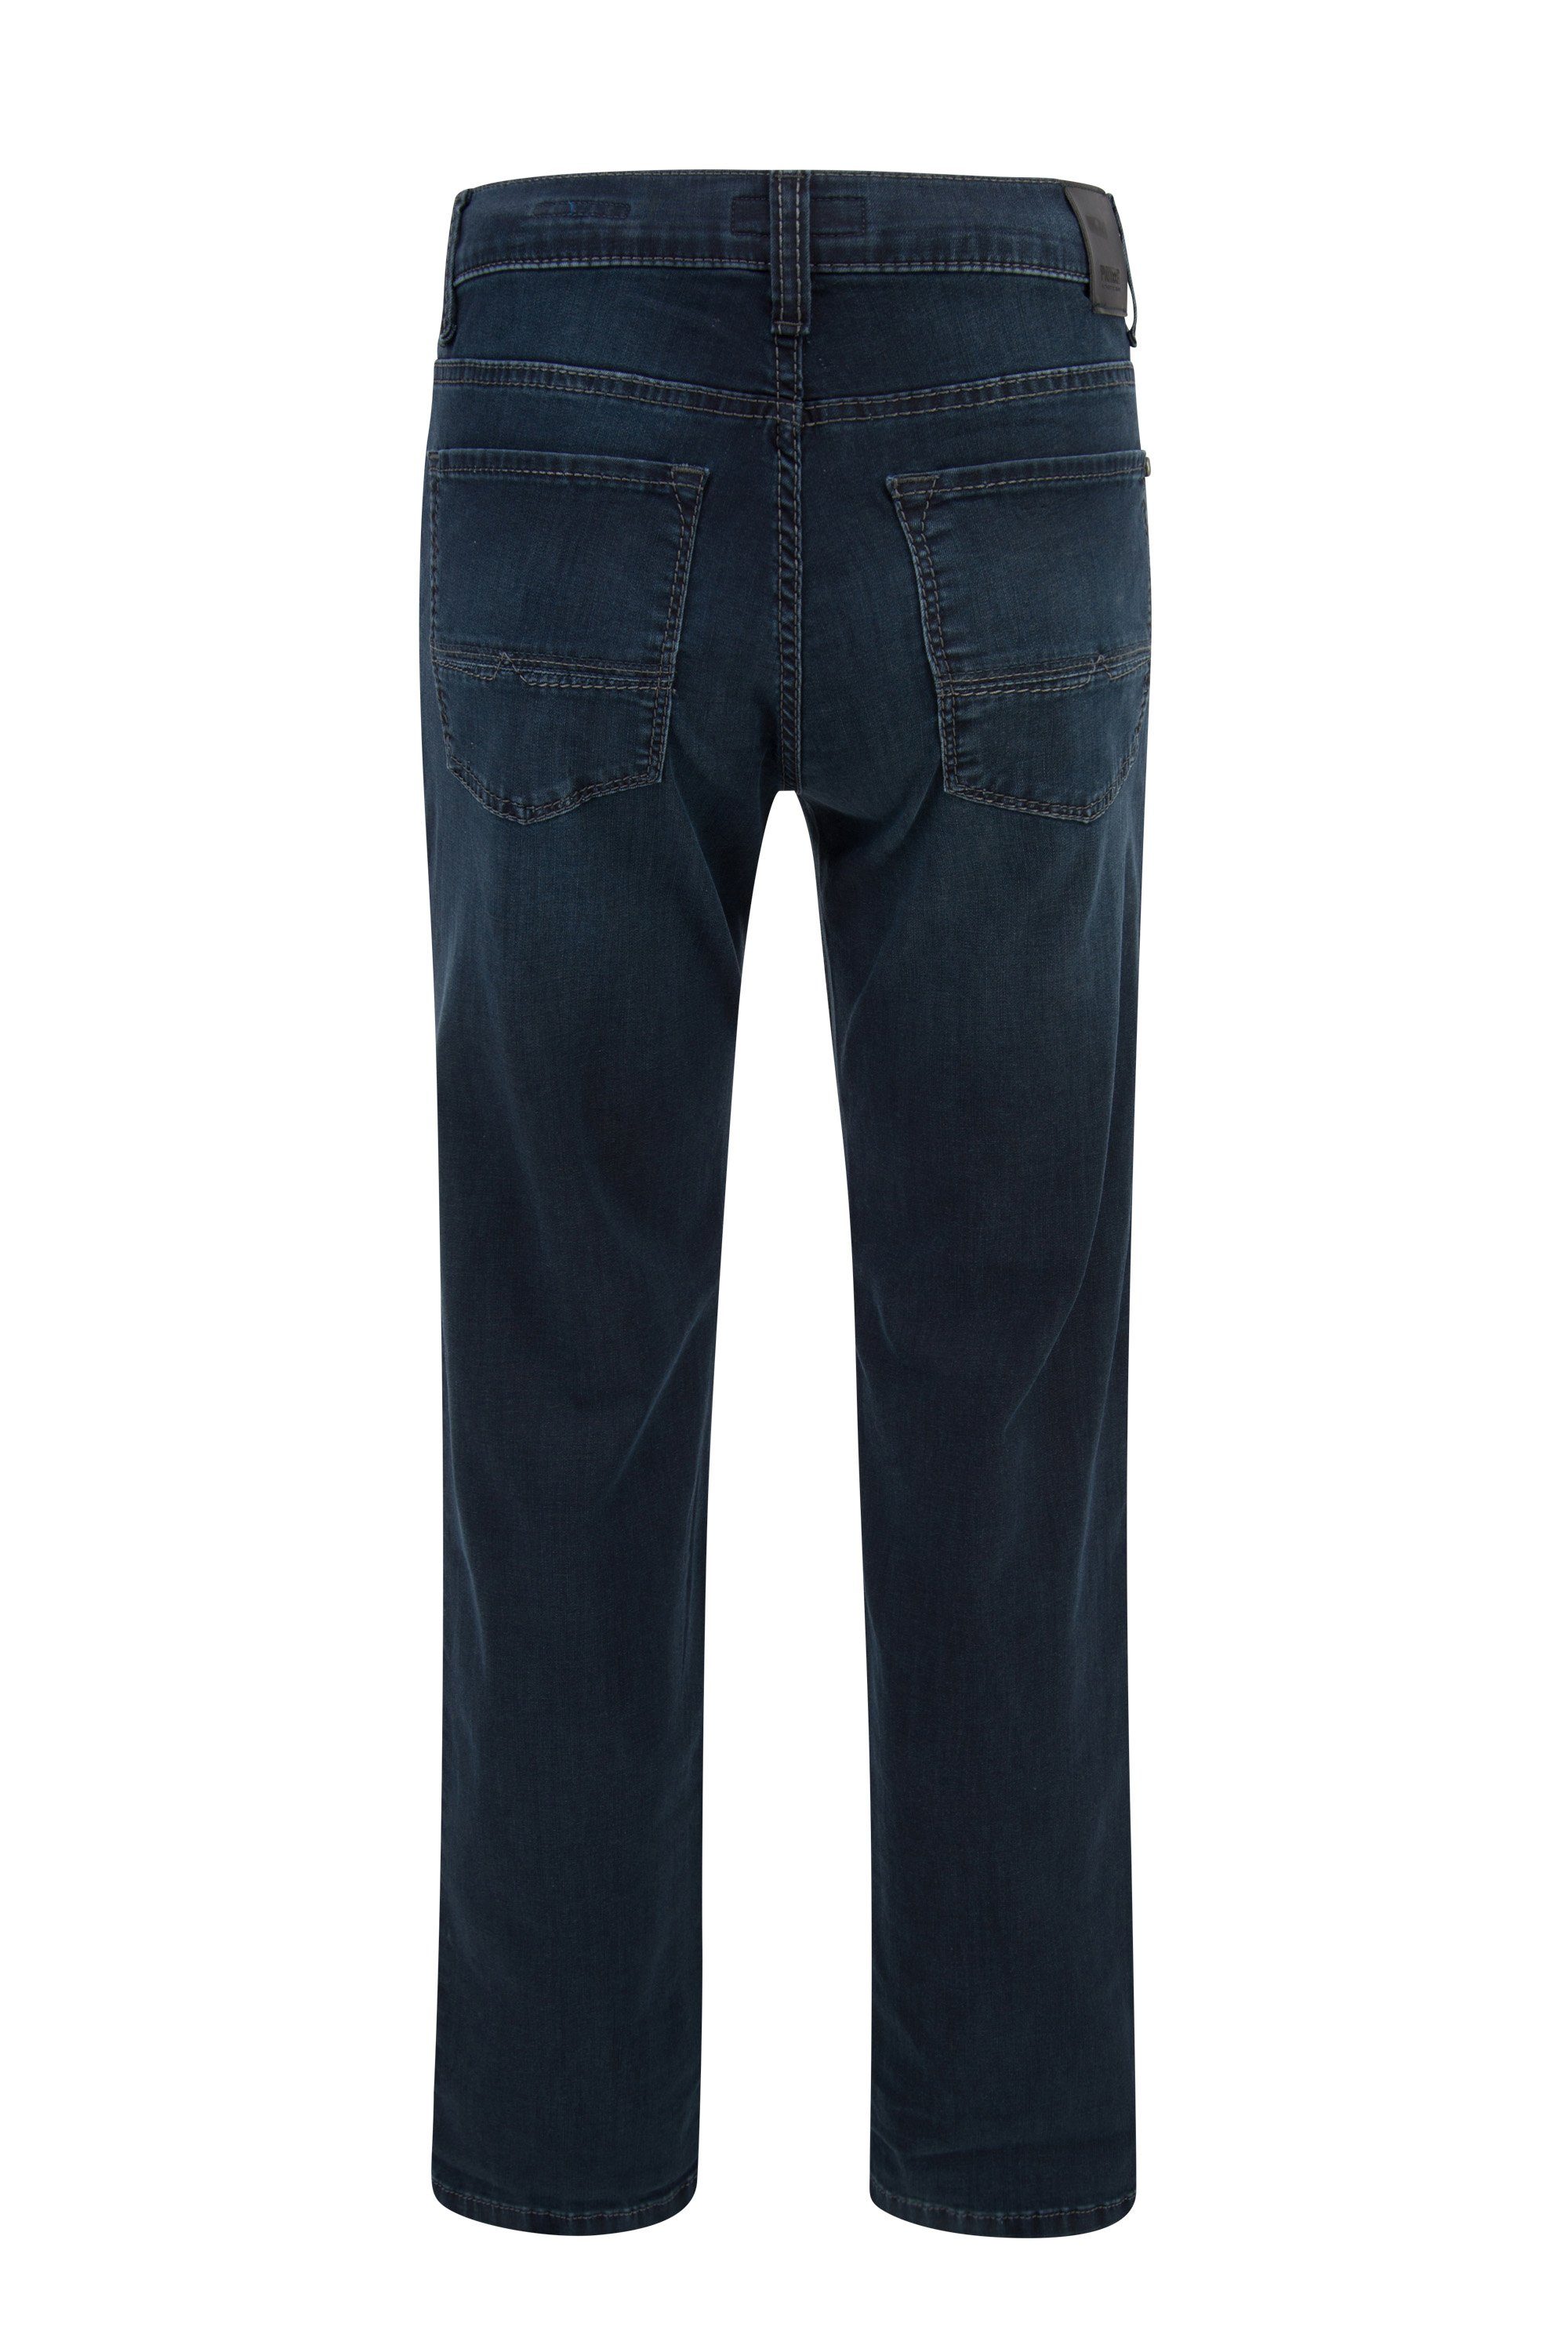 Jeans 1674 Pioneer used 9966.433 MEGAFLEX blue RANDO dark PIONEER 5-Pocket-Jeans Authentic